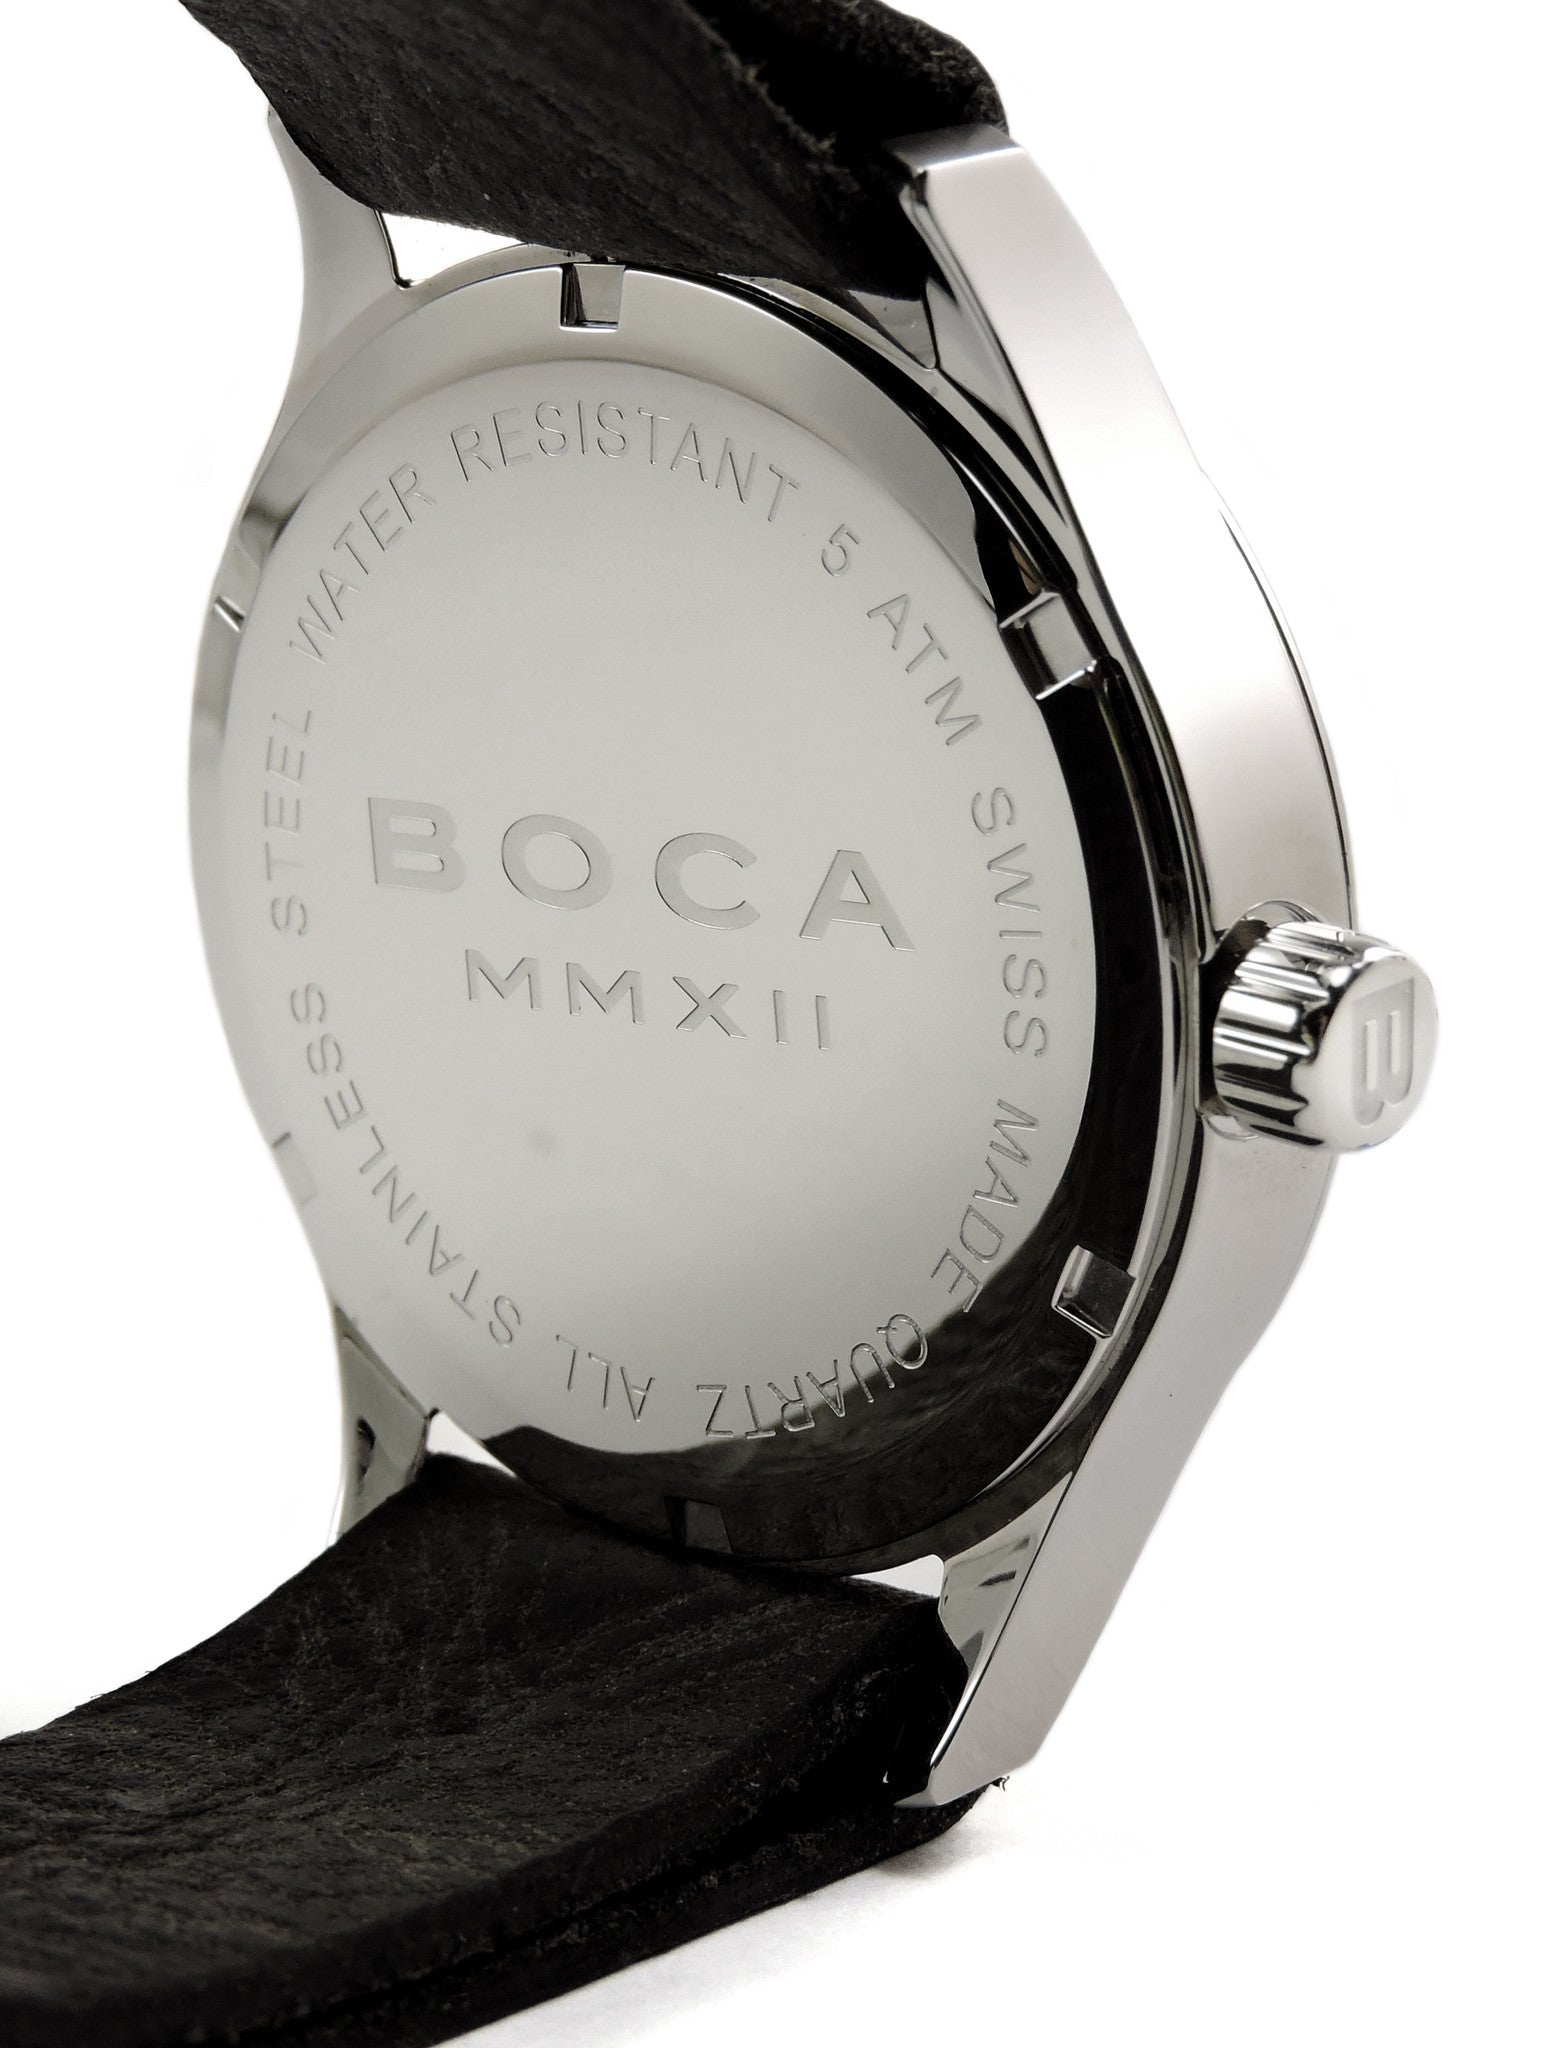 Primero Black - Night Blue Wristband - BOCA MMXII - Official website